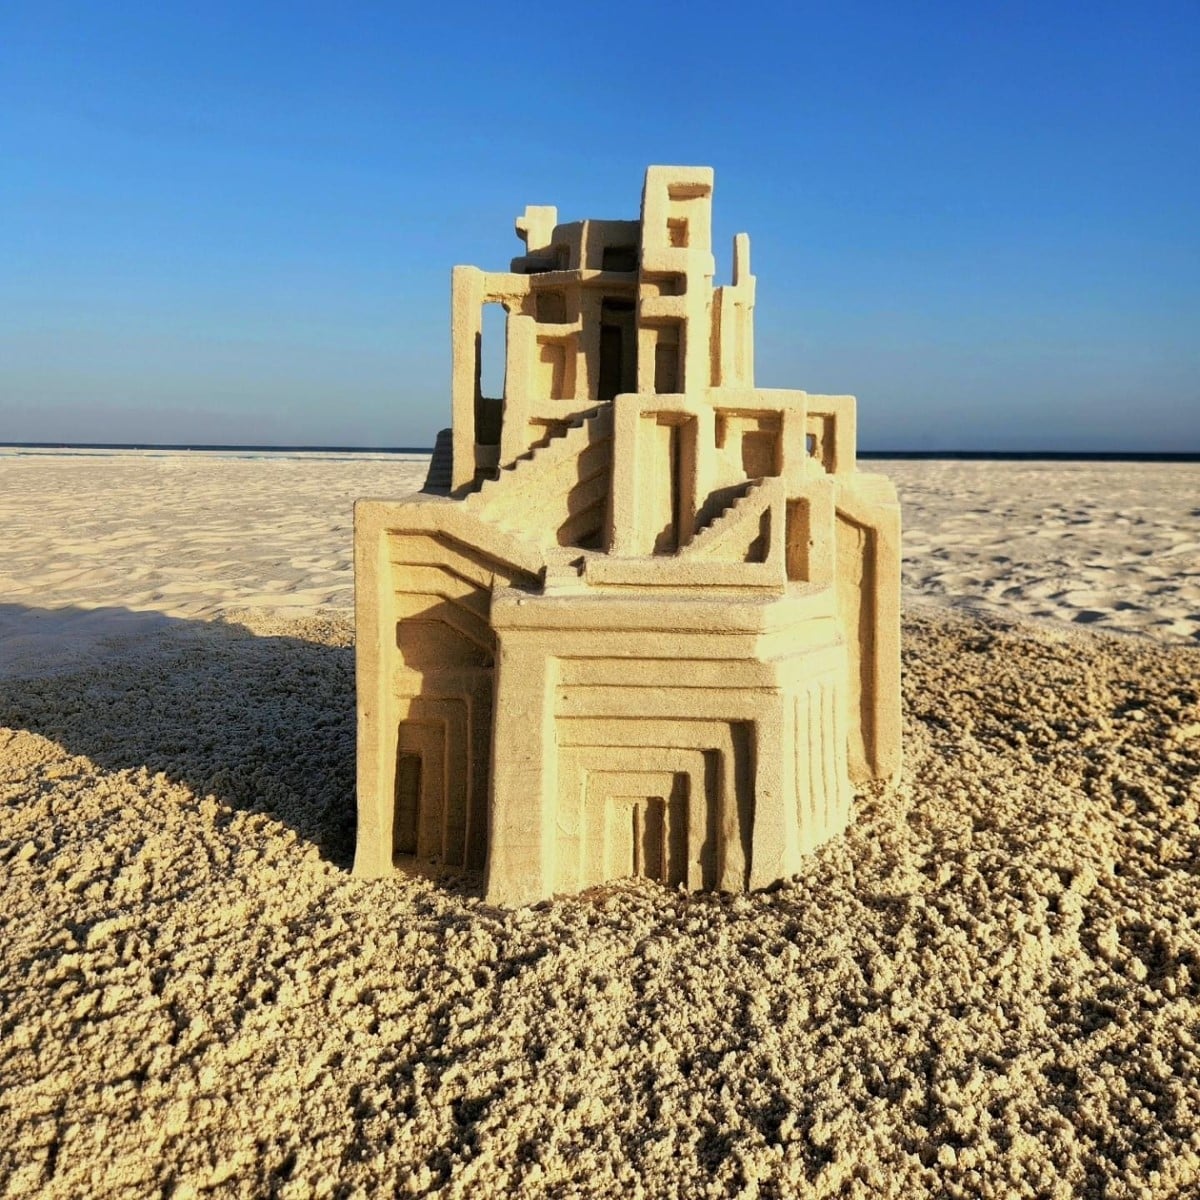 Creative sand sculpture